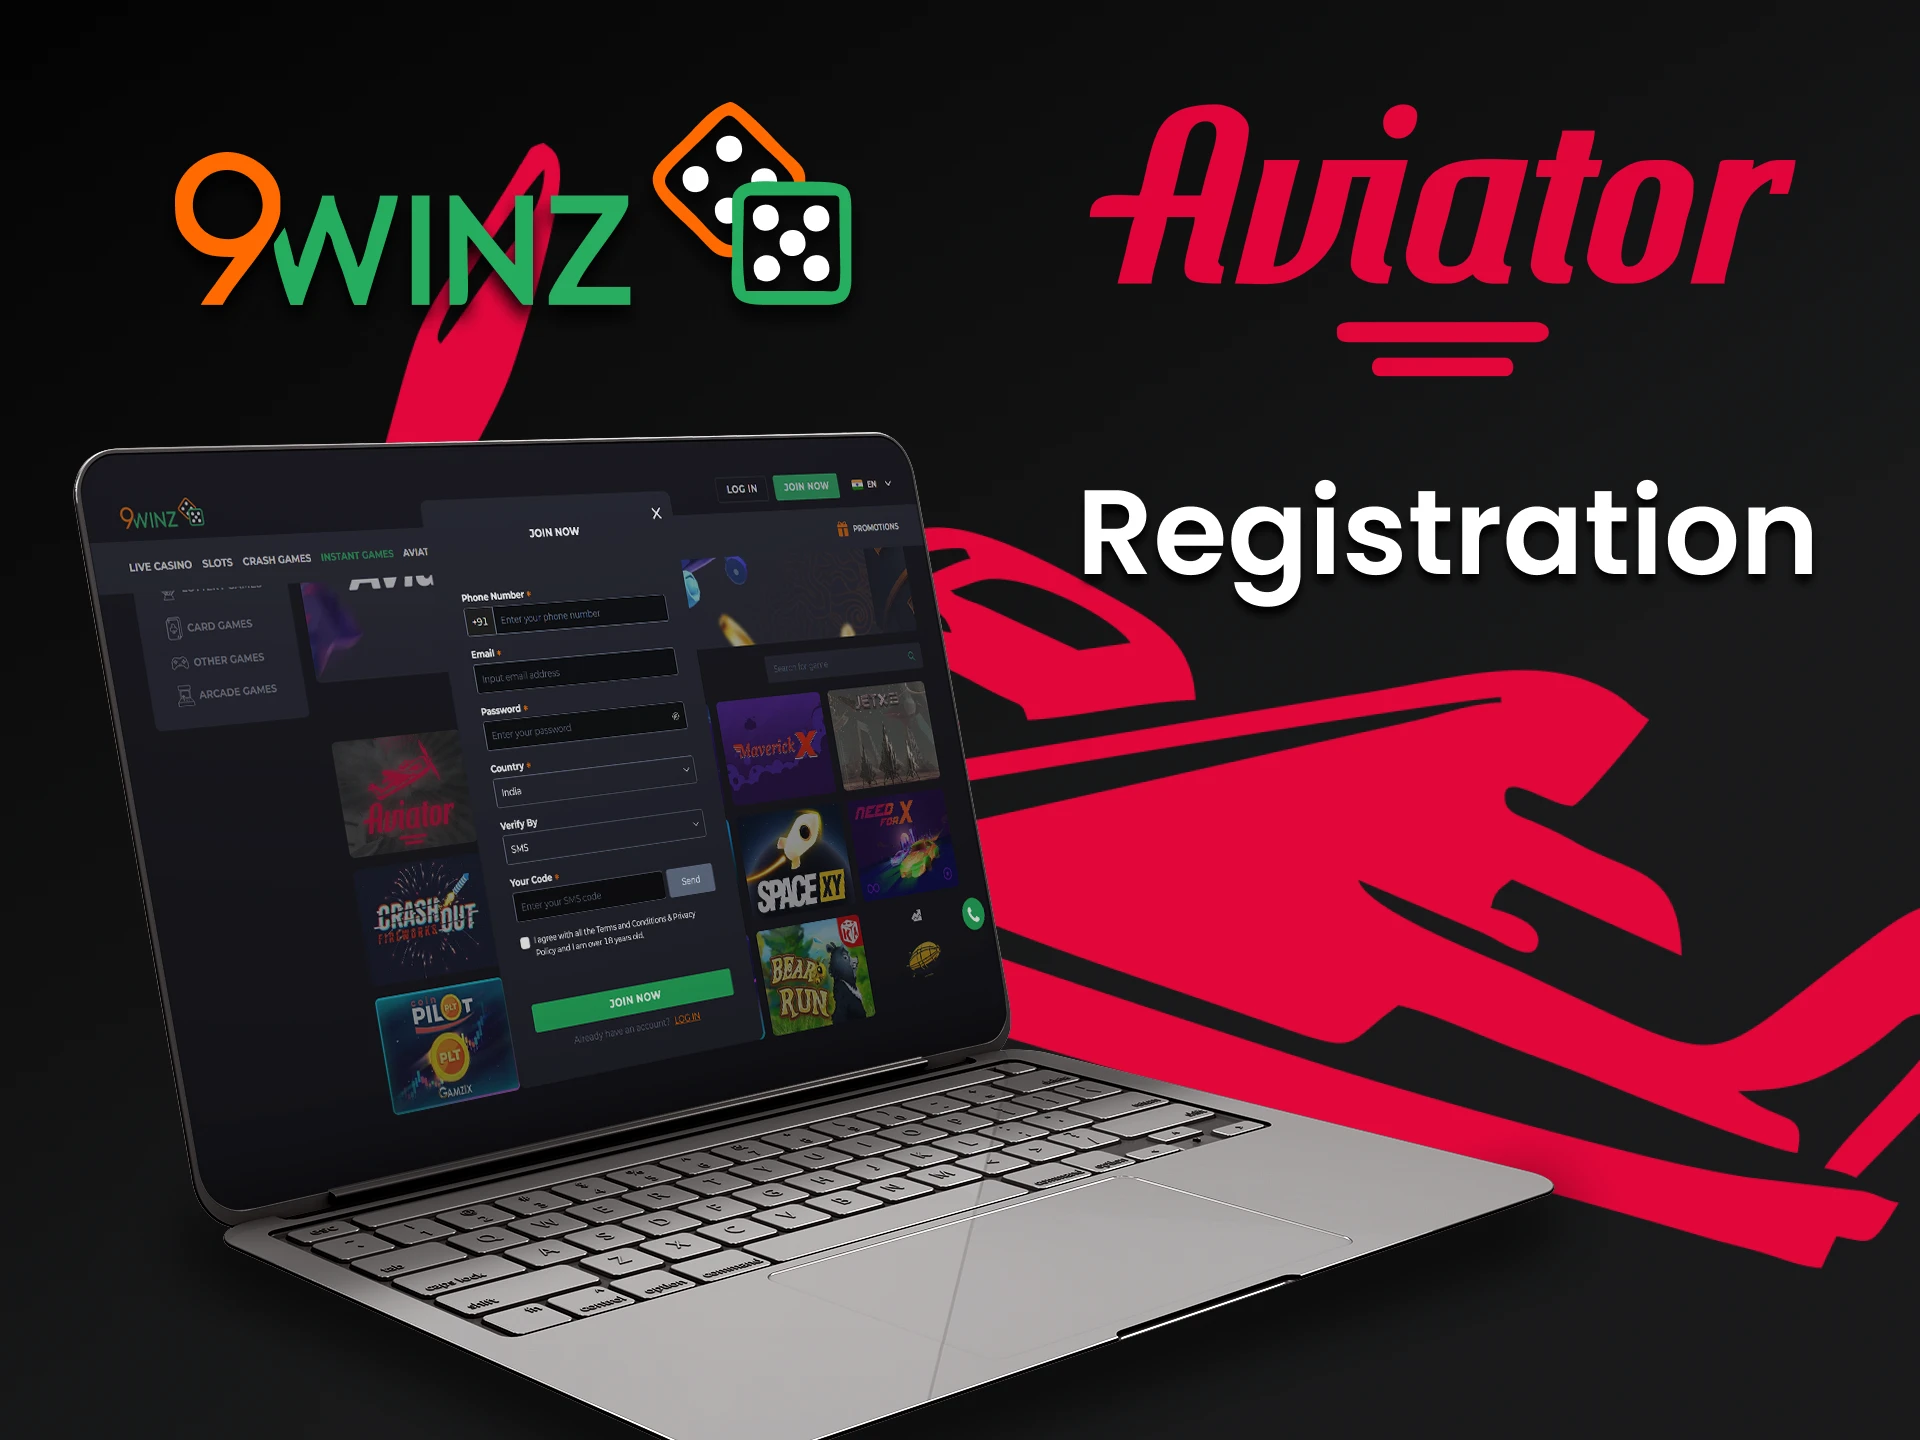 Create an account on 9winz to play Aviator.